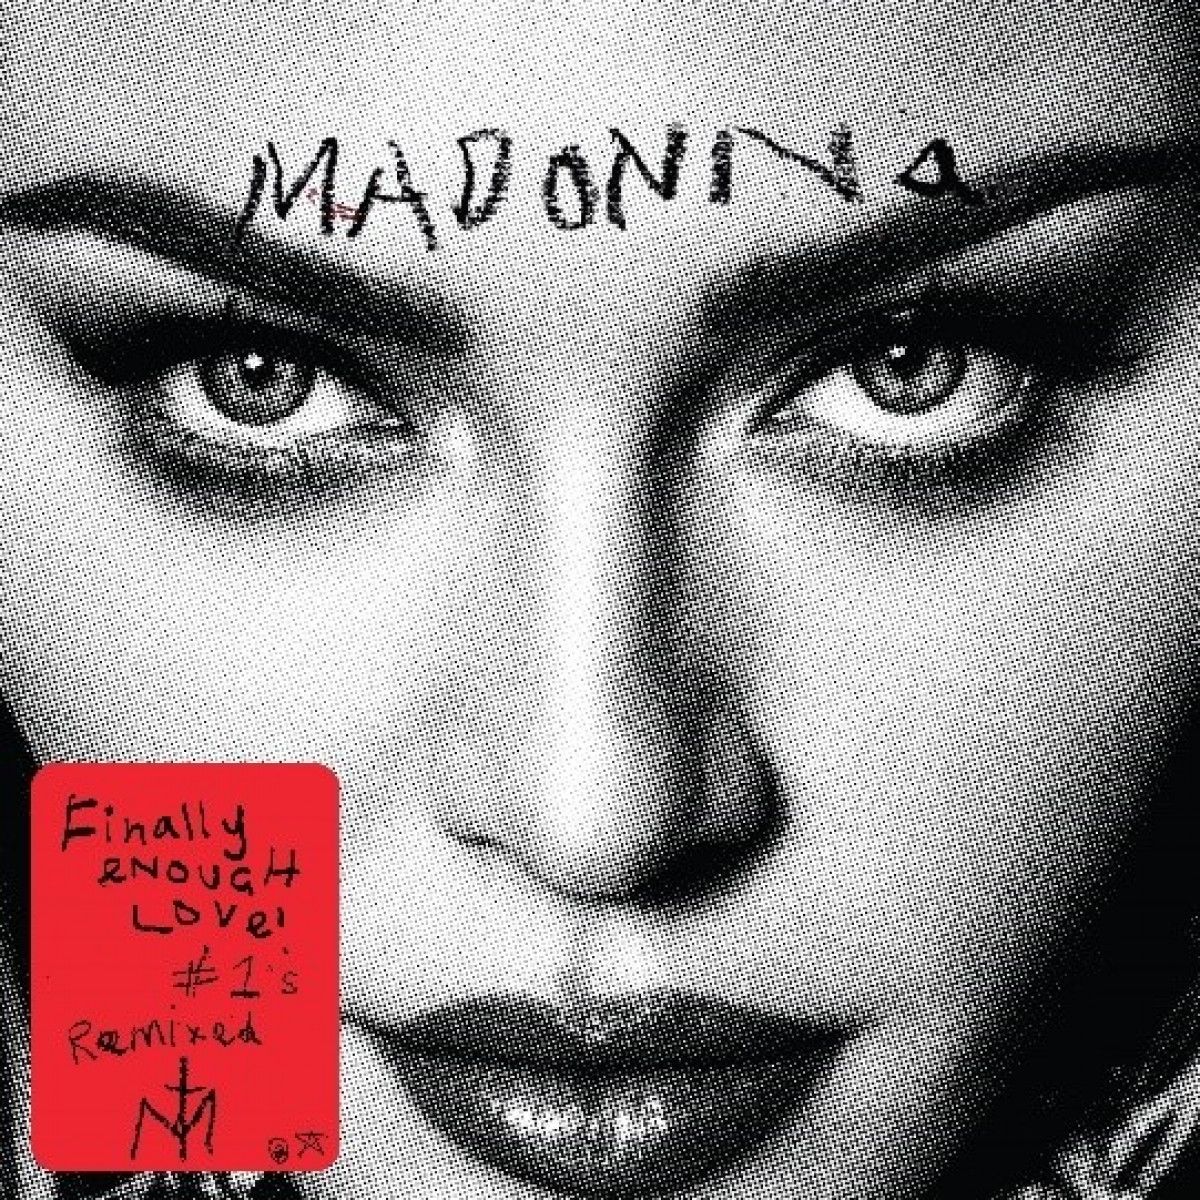 Madonna - Finally Enough Love: #1's Remixed - 2LP